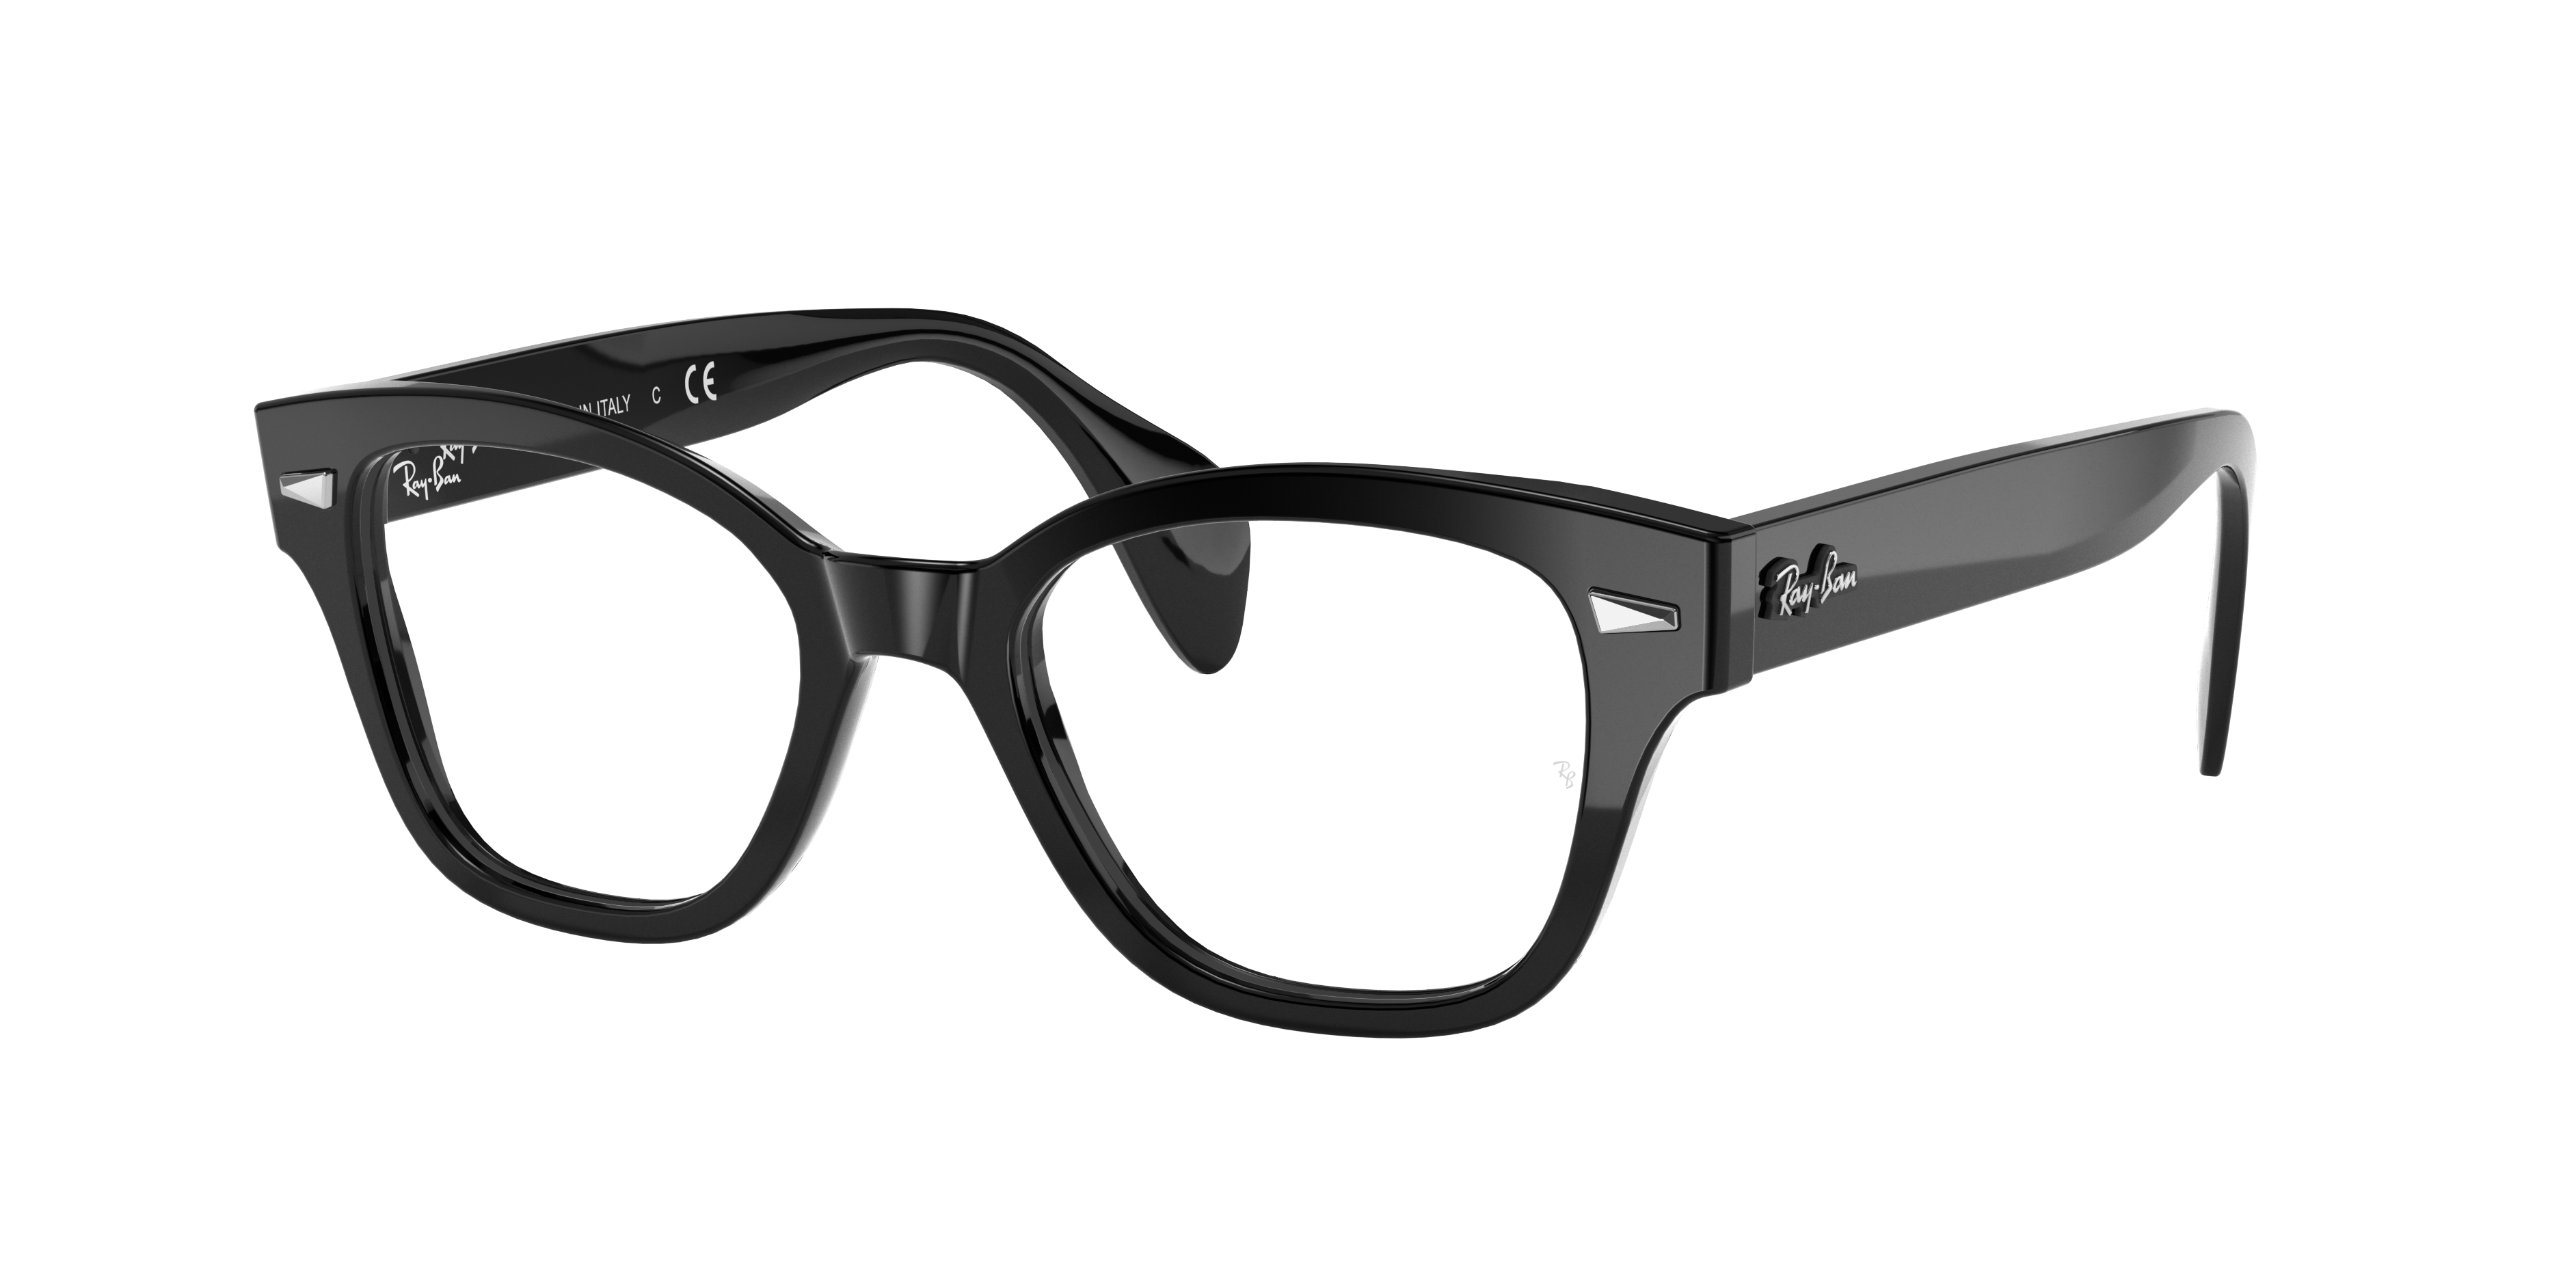 Inconvenience Sleet Inland Ray Ban Prescription Sunglasses Glasses Refurbishment Flow Overthrow